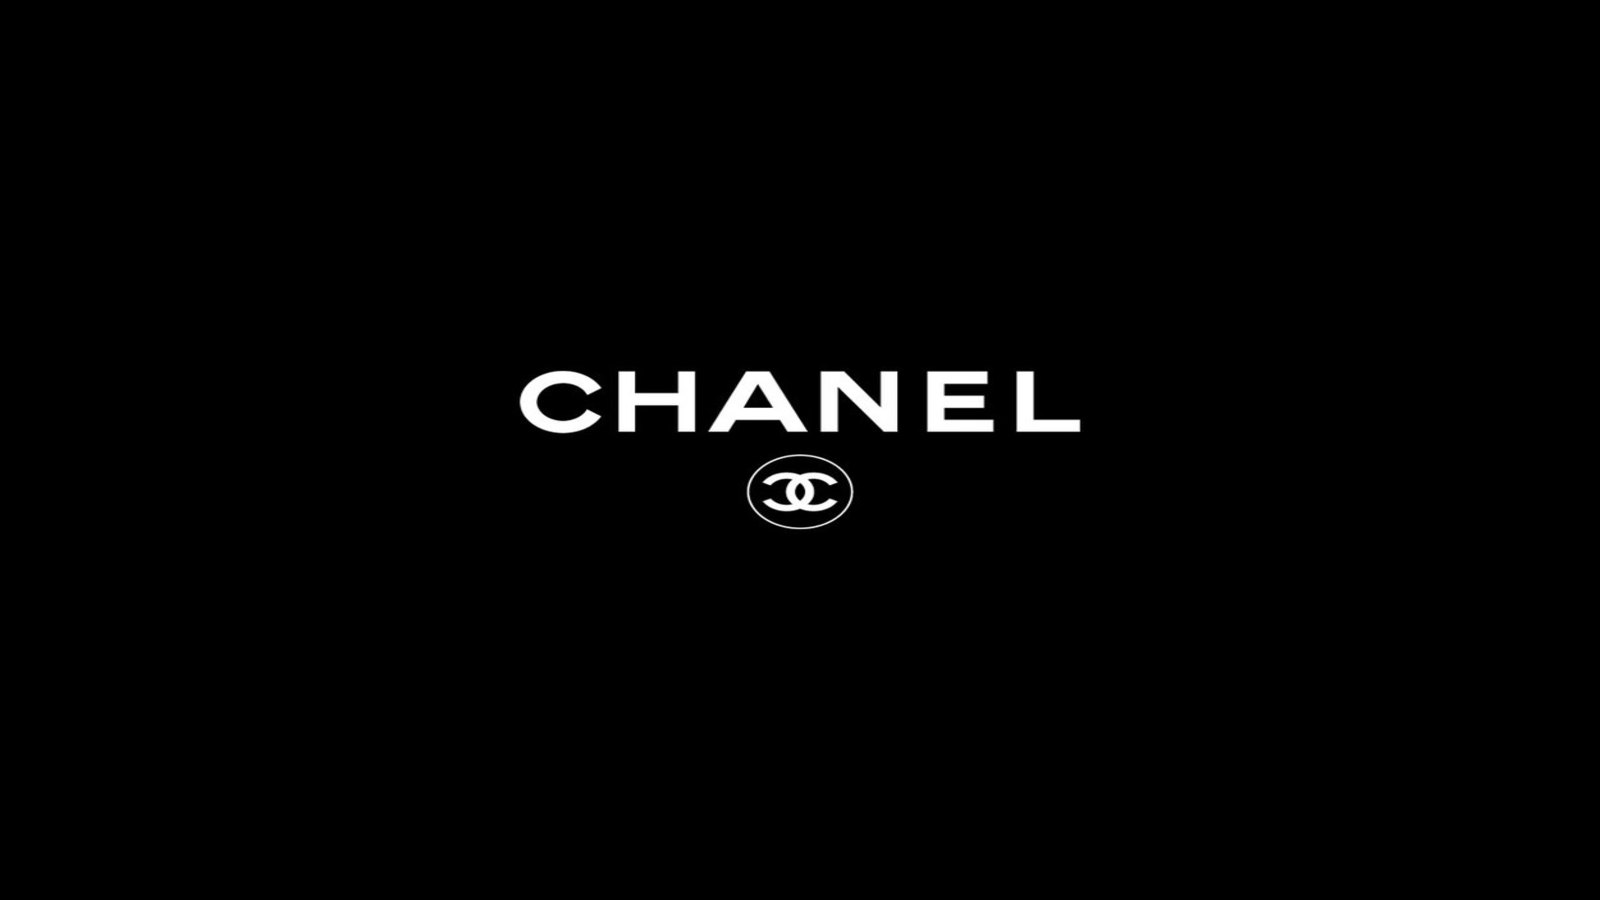 Chanel Puter Wallpaper Desktop Background